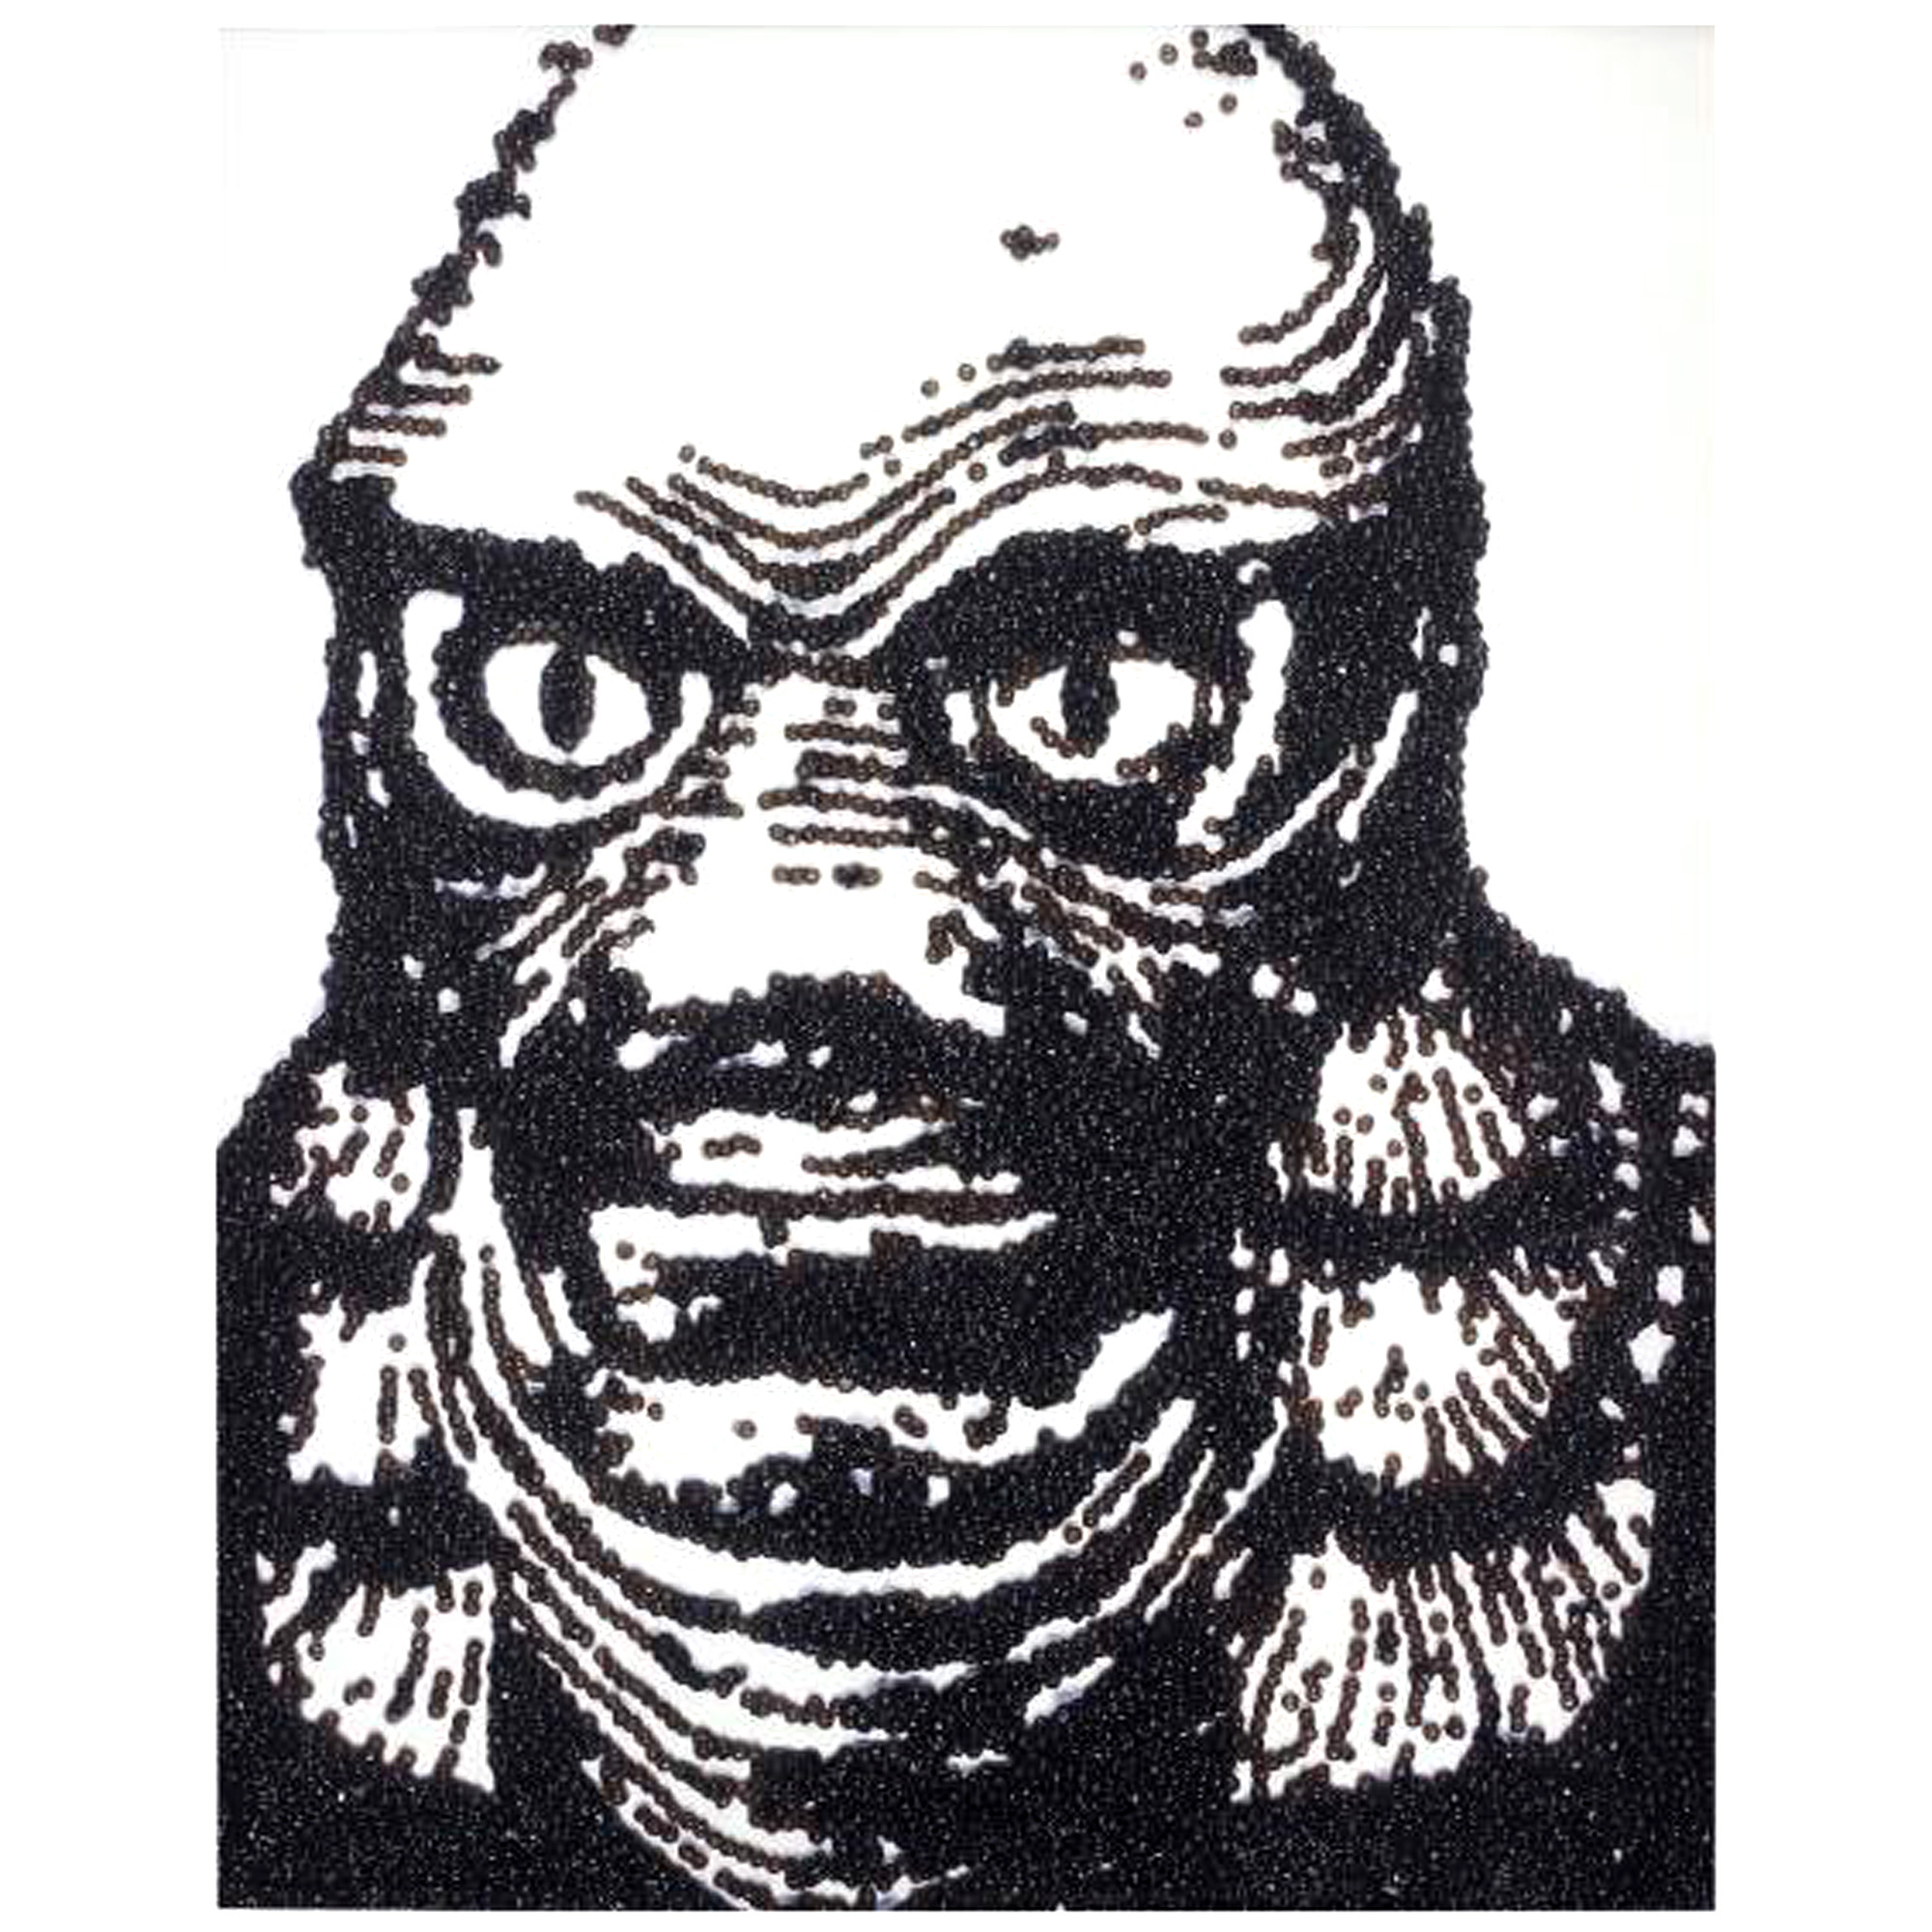 VIK MUNIZ Creature from the Black Lagoon (From Caviar Monsters), 2004 chromogenic print, flush-mounted to aluminium.jpg